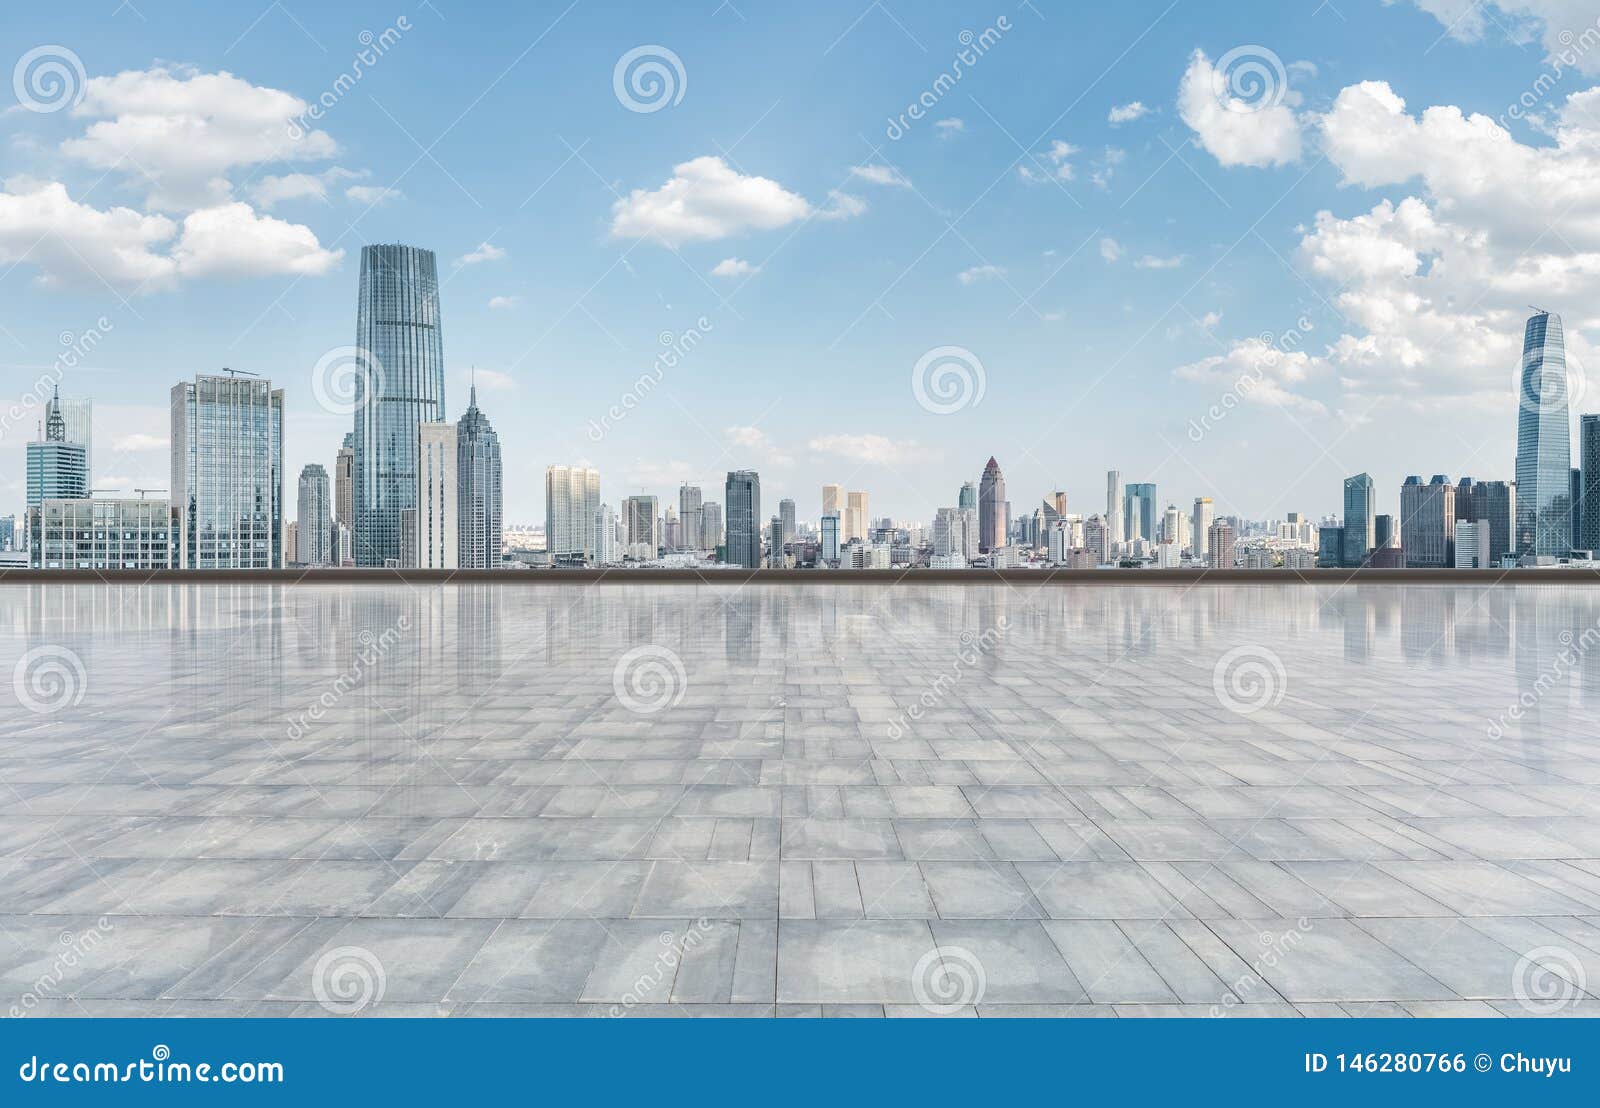 city skyline and square ground